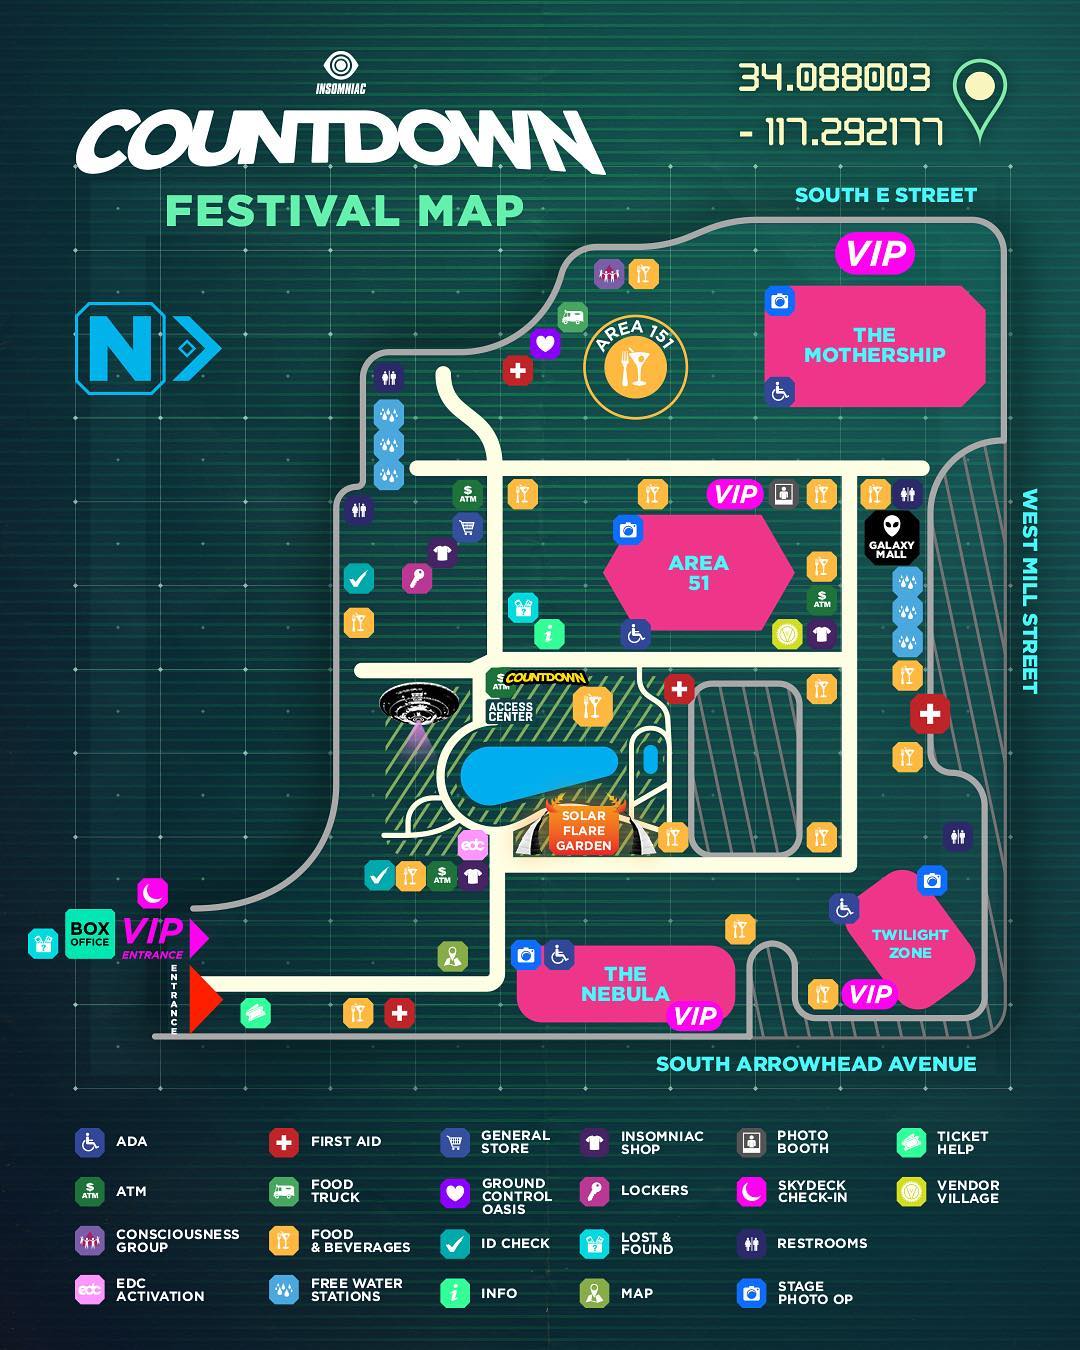 Countdown NYE 2018 Festival Map